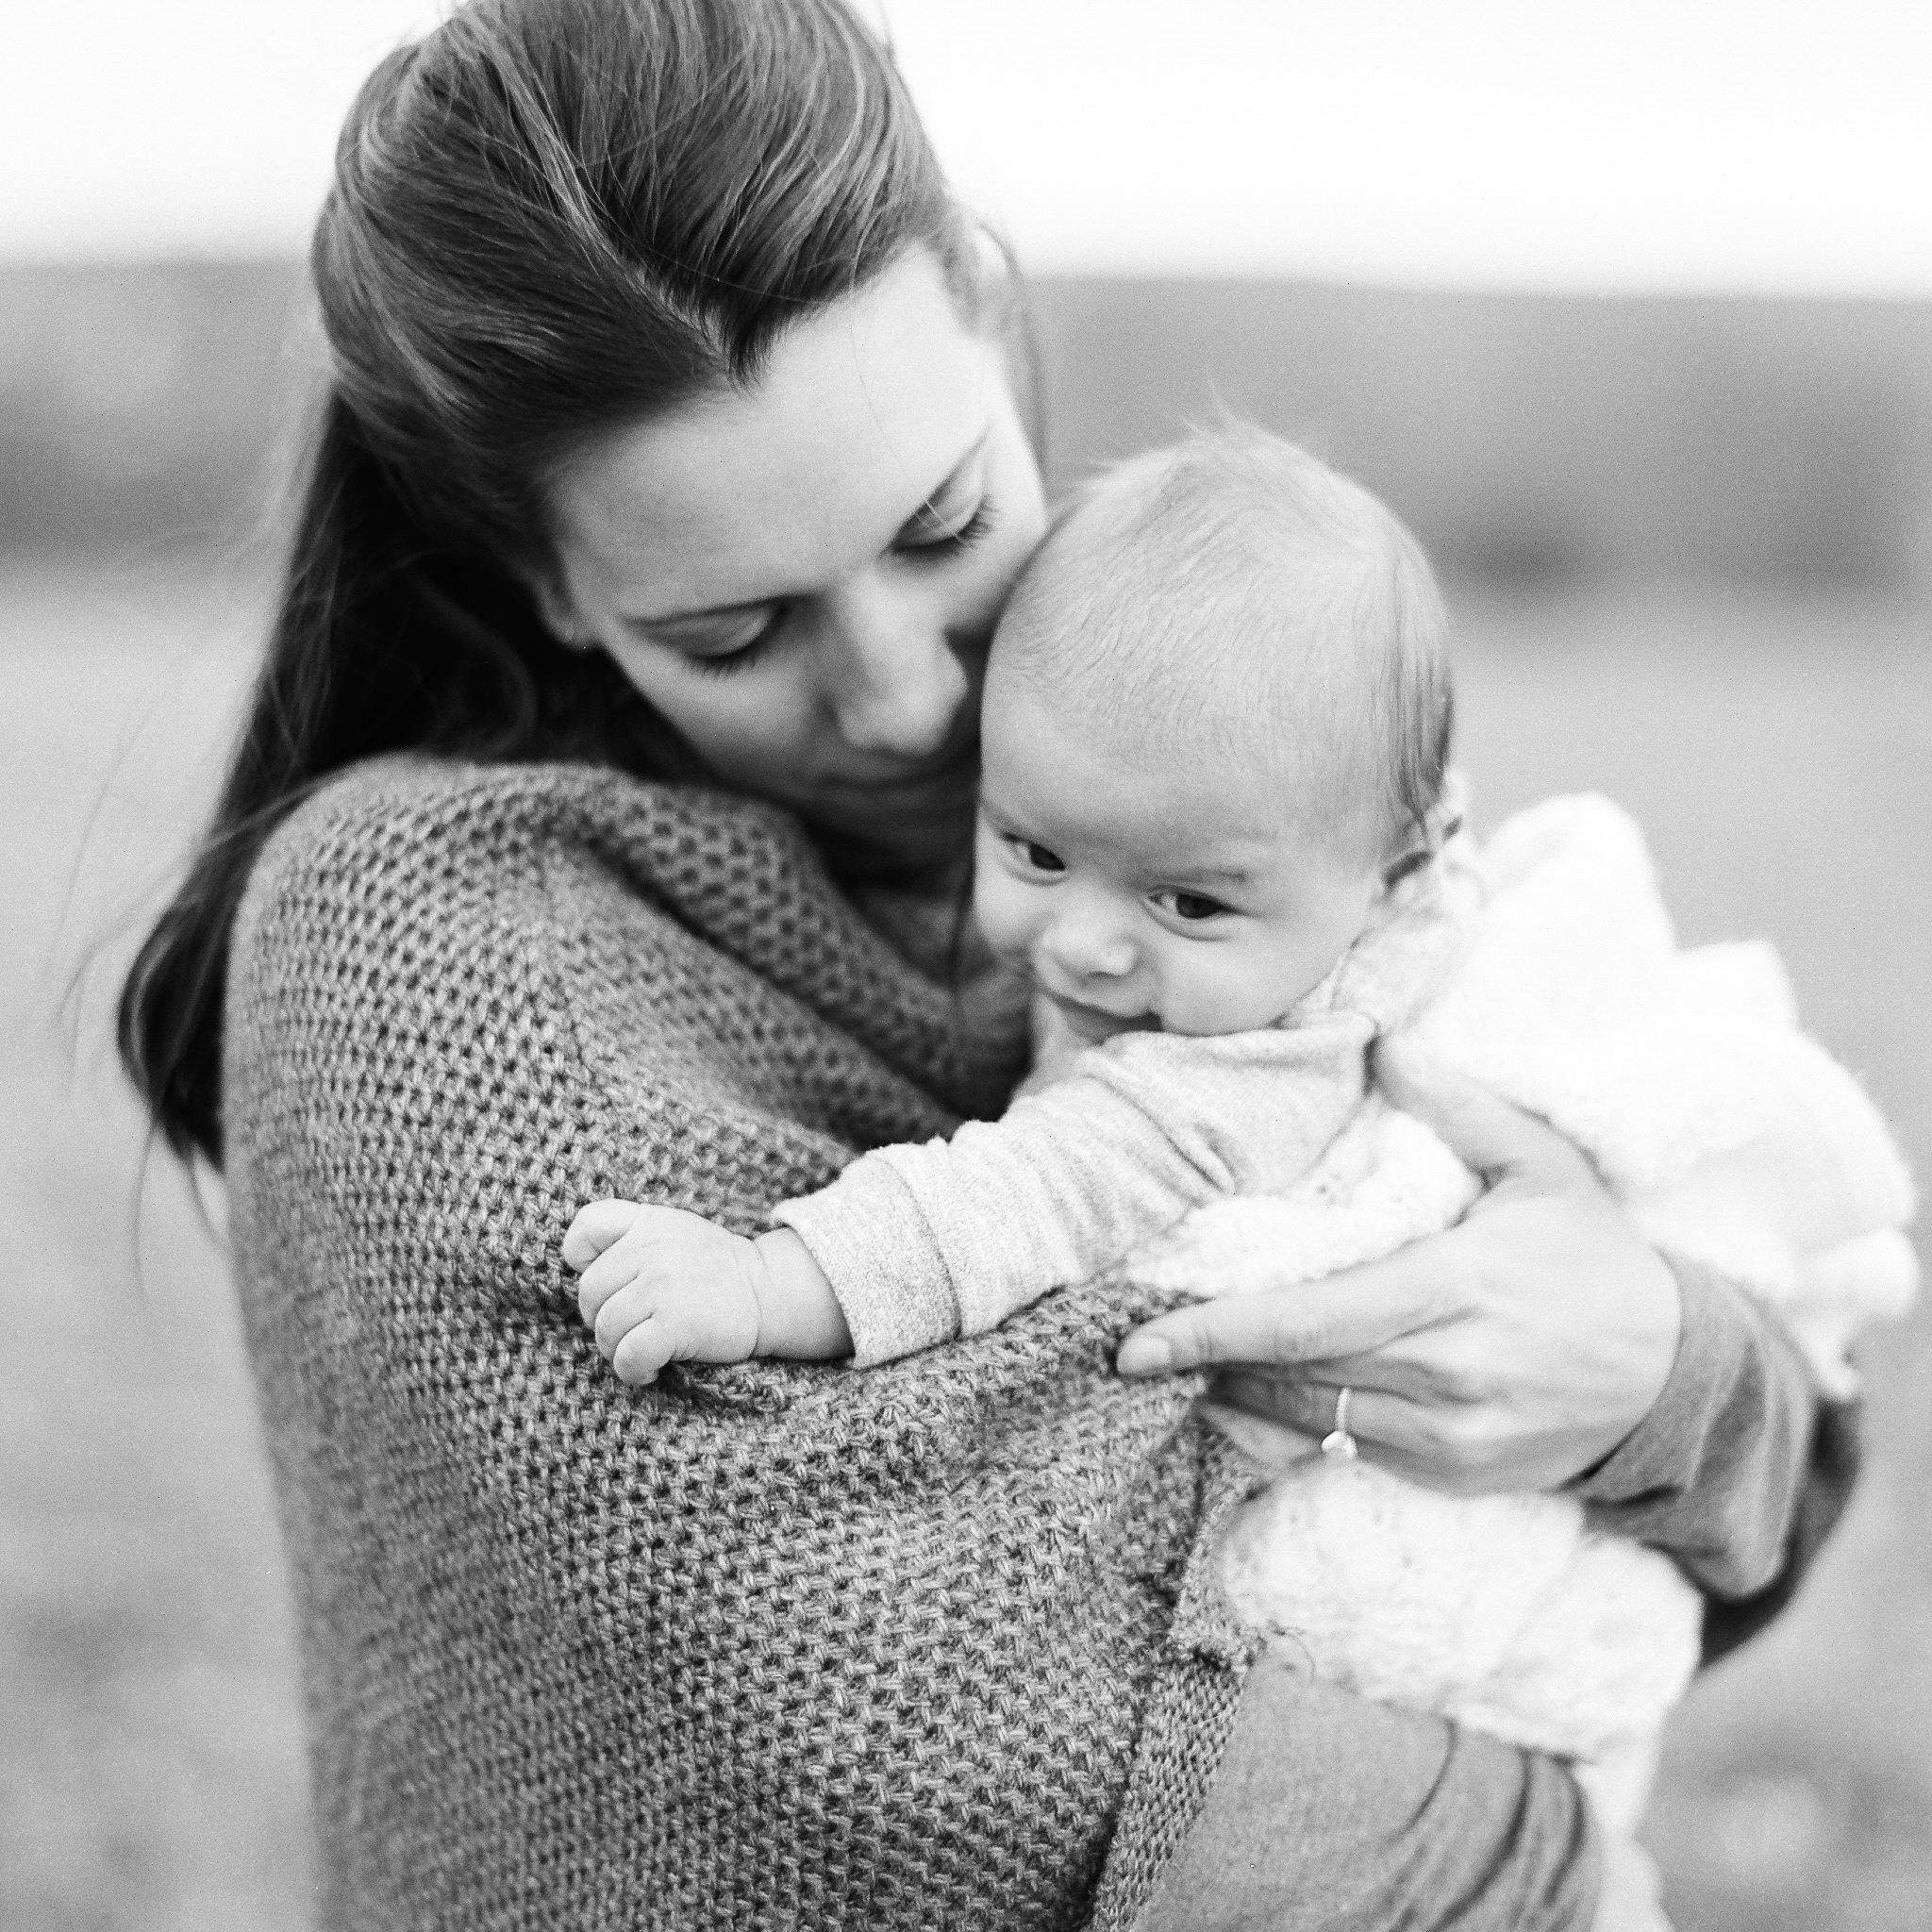 Portland Maine Black and White Film Newborn and Baby Photographer Tiffany Farley, http://tiffanyfarley.com